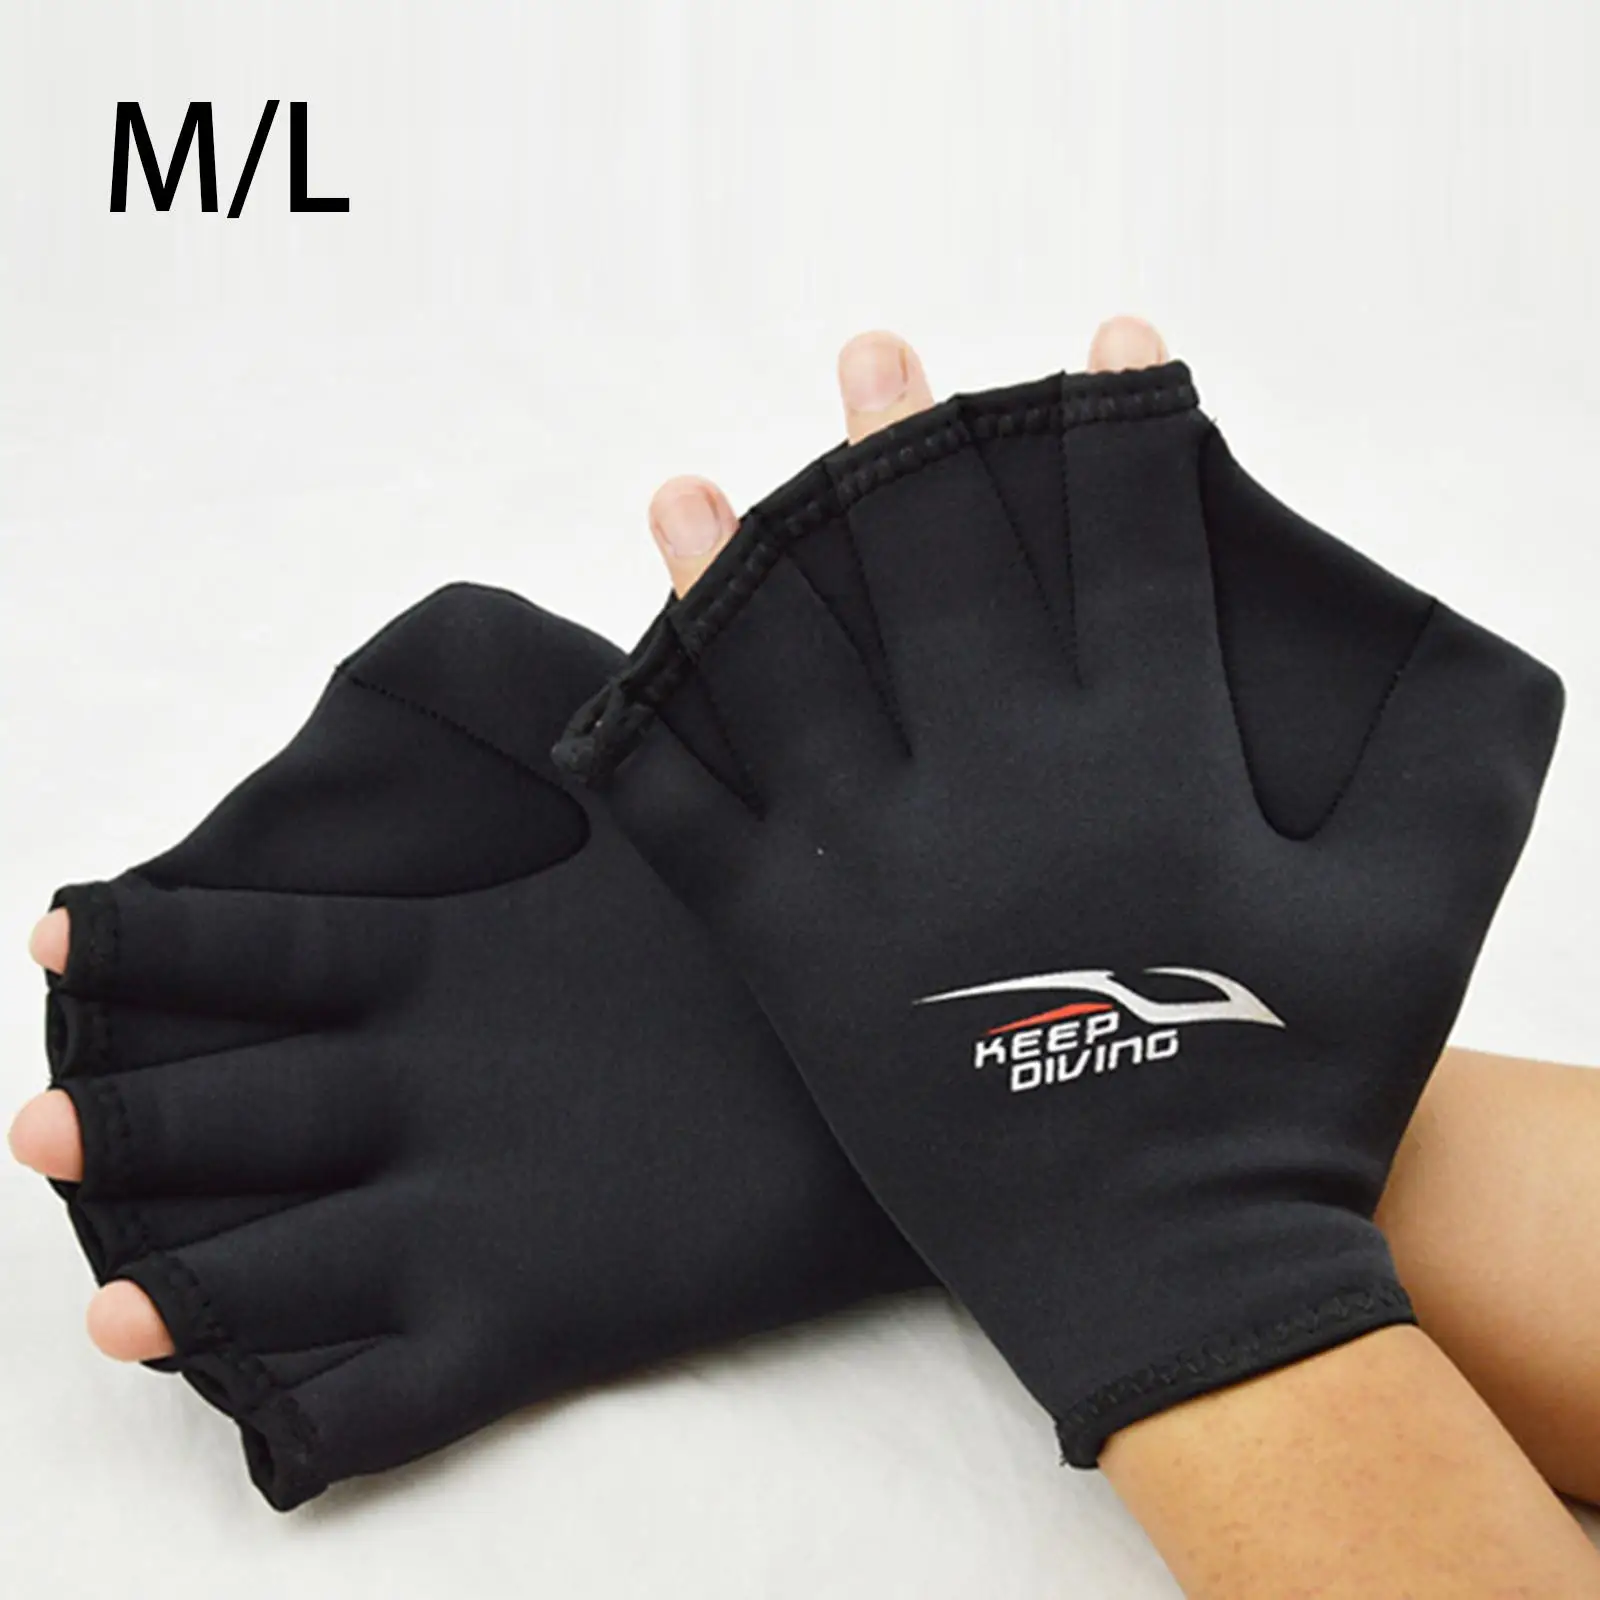 Webbed Swim Gloves No Fading for Helping Upper Body Resistance Women Men